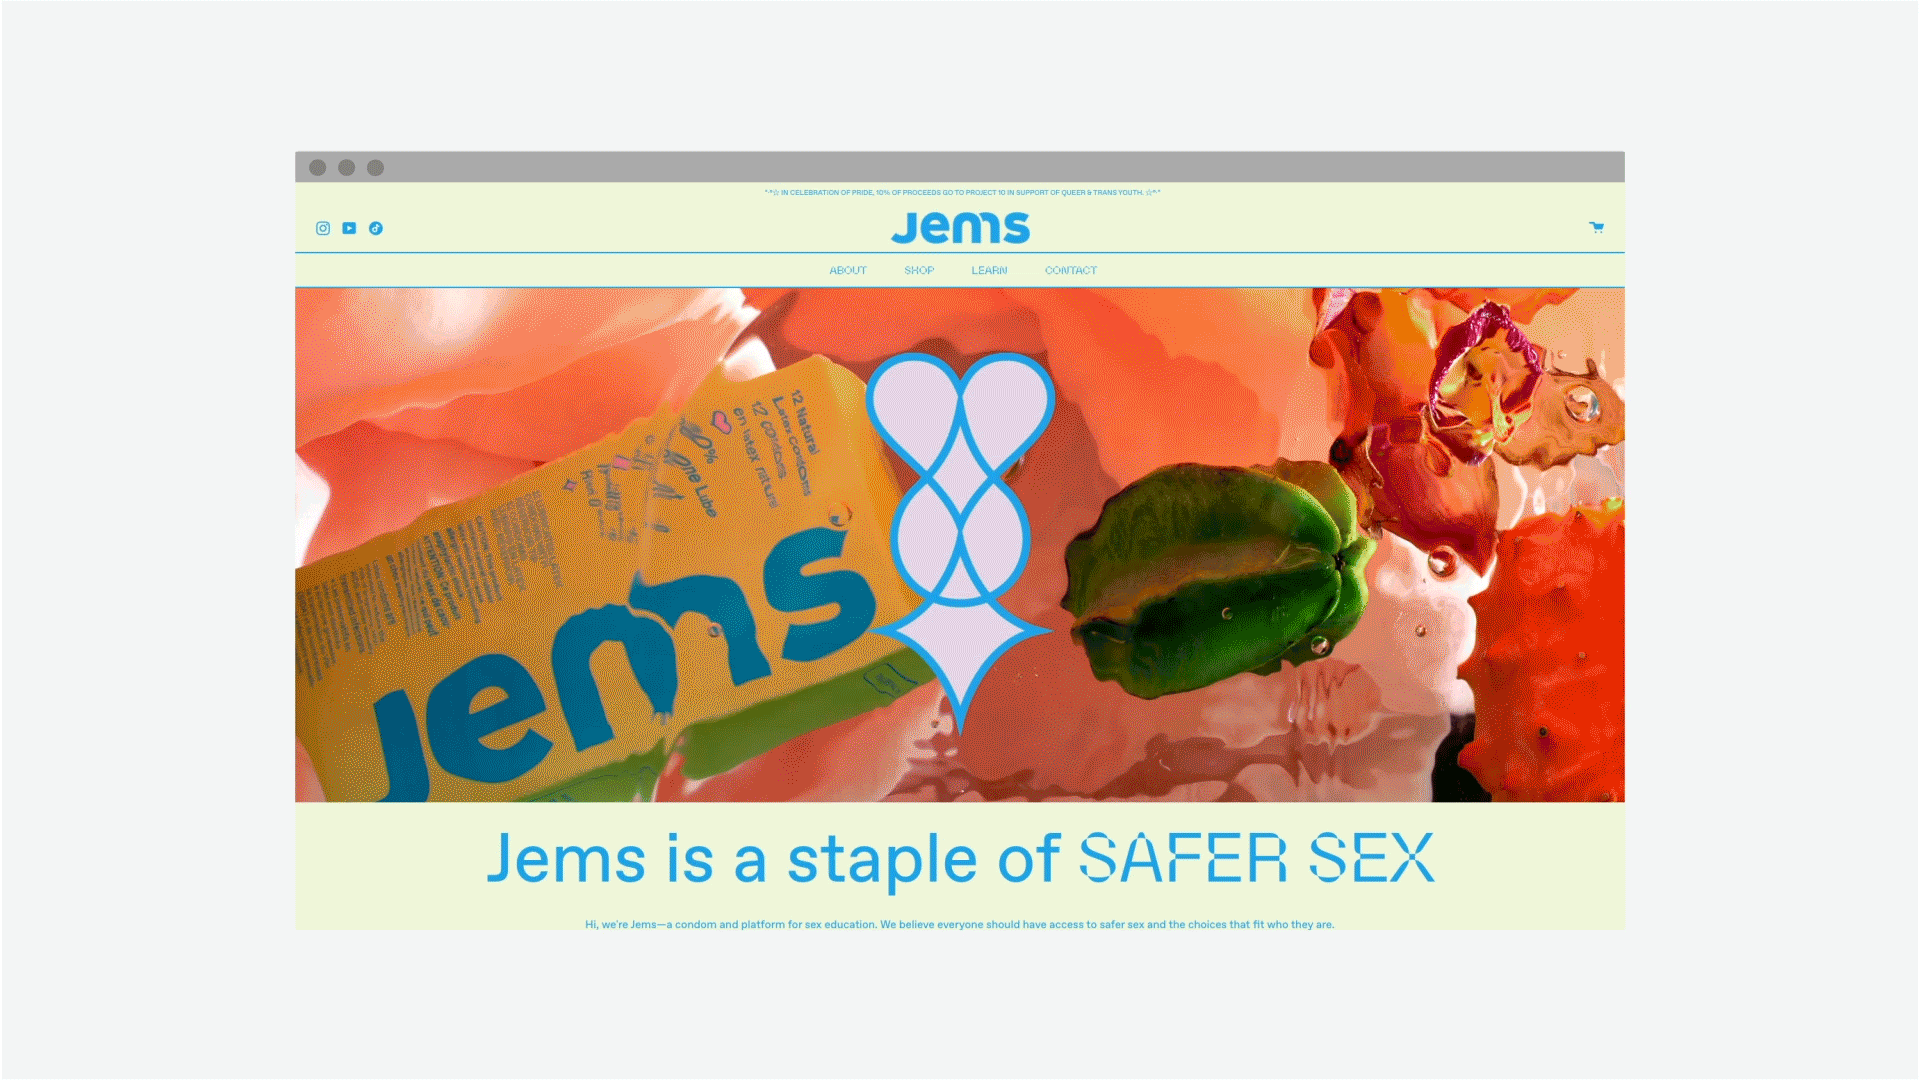 Jems: A Staple of Safer Sex